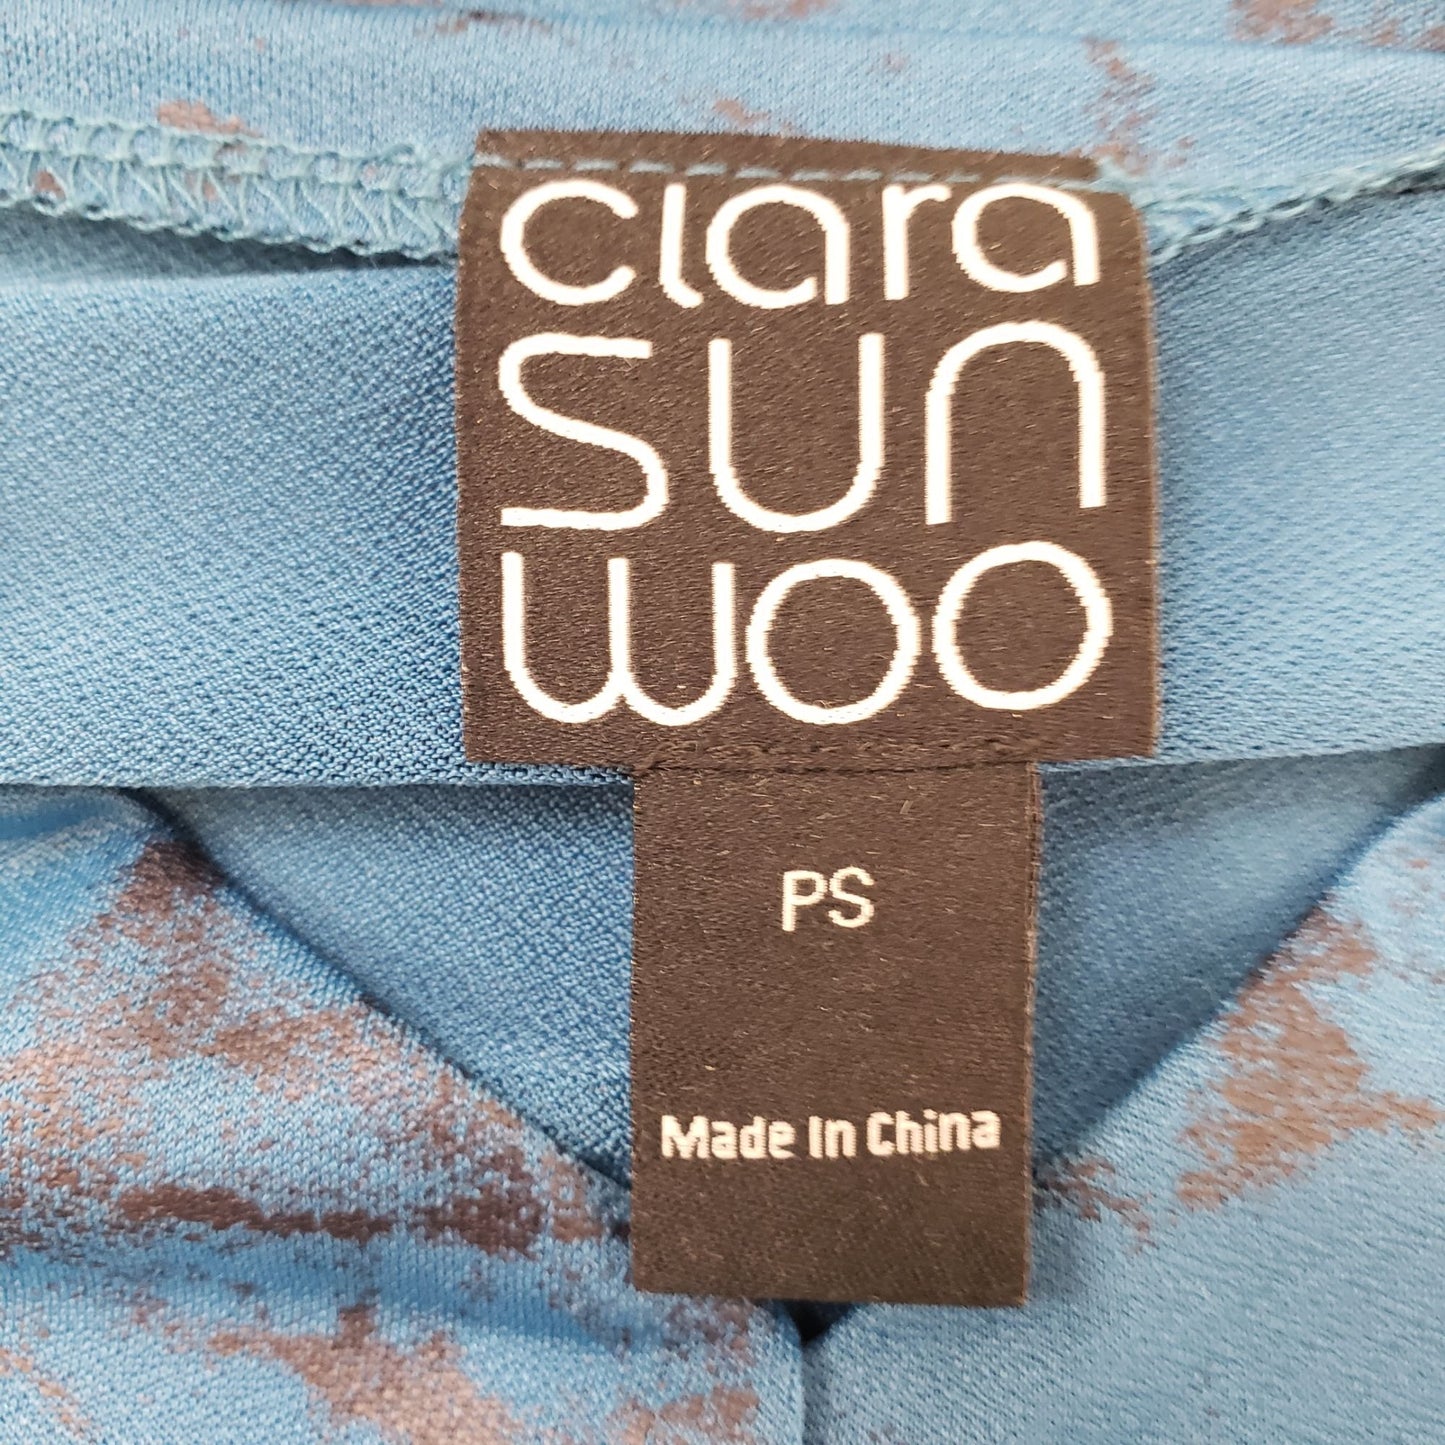 Ciara Sun Woo Splatter Print Tie Front Blouse Size Small Petite